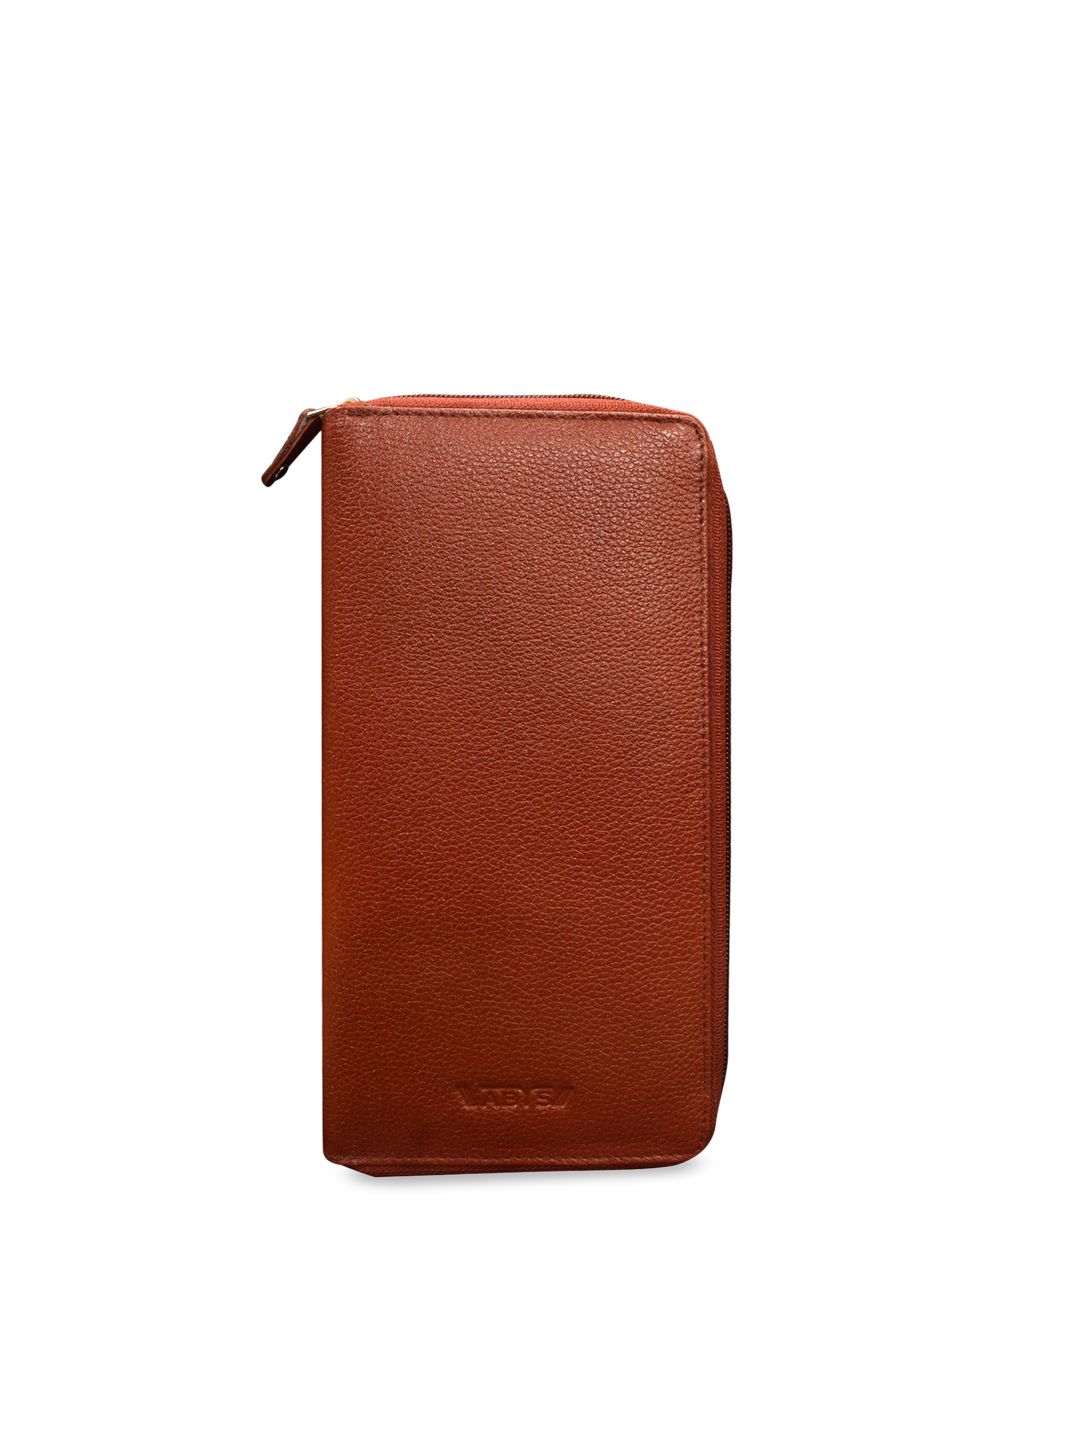 ABYS Unisex Brown Textured Genuine Leather Zip Around Wallet Price in India